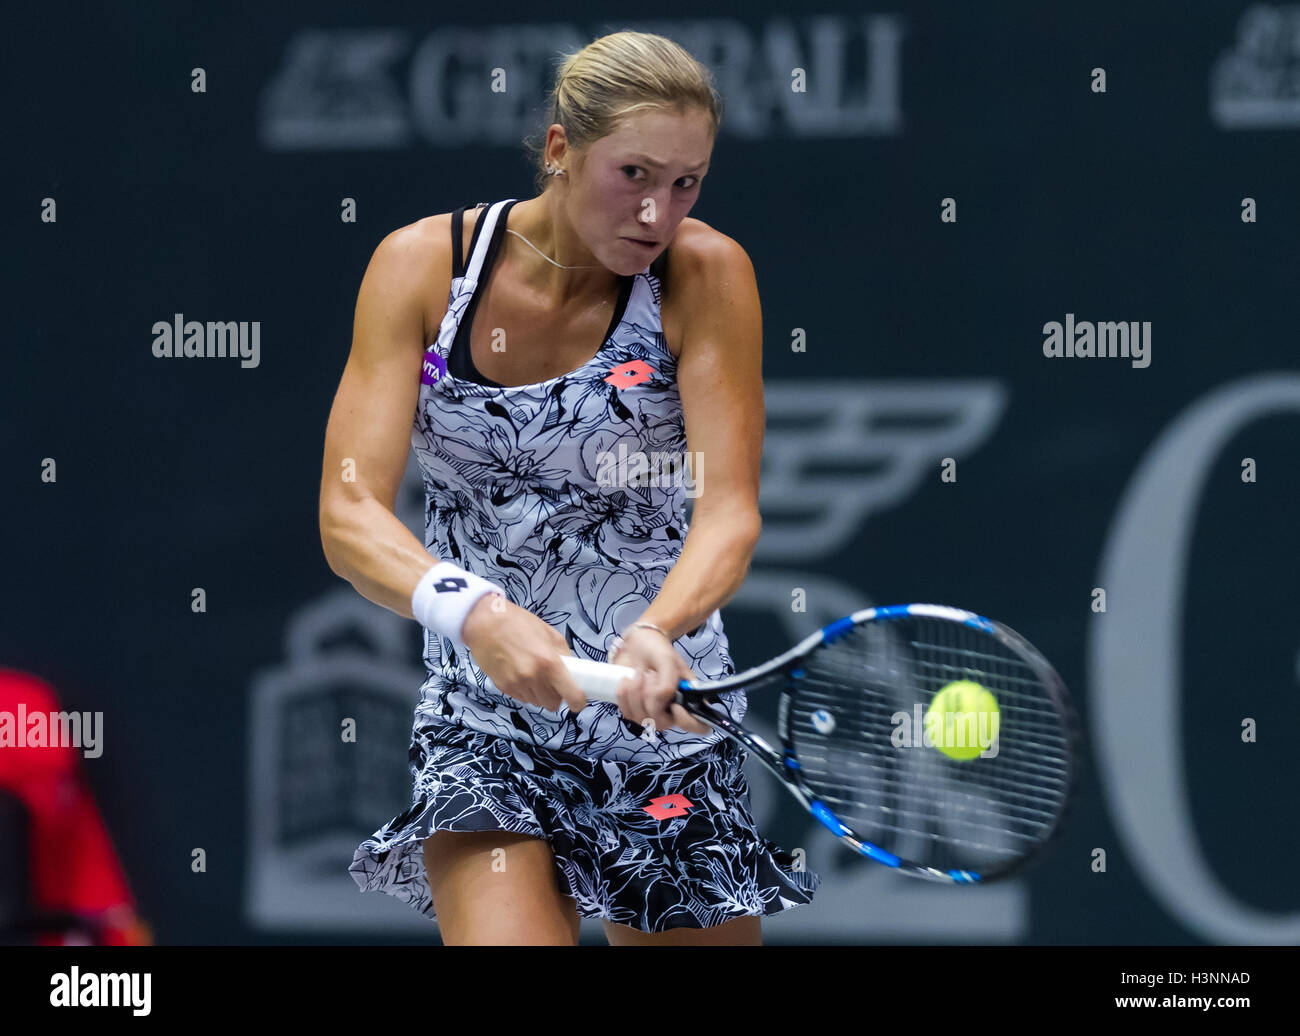 Denisa allertova tennis hi-res stock photography and images - Alamy